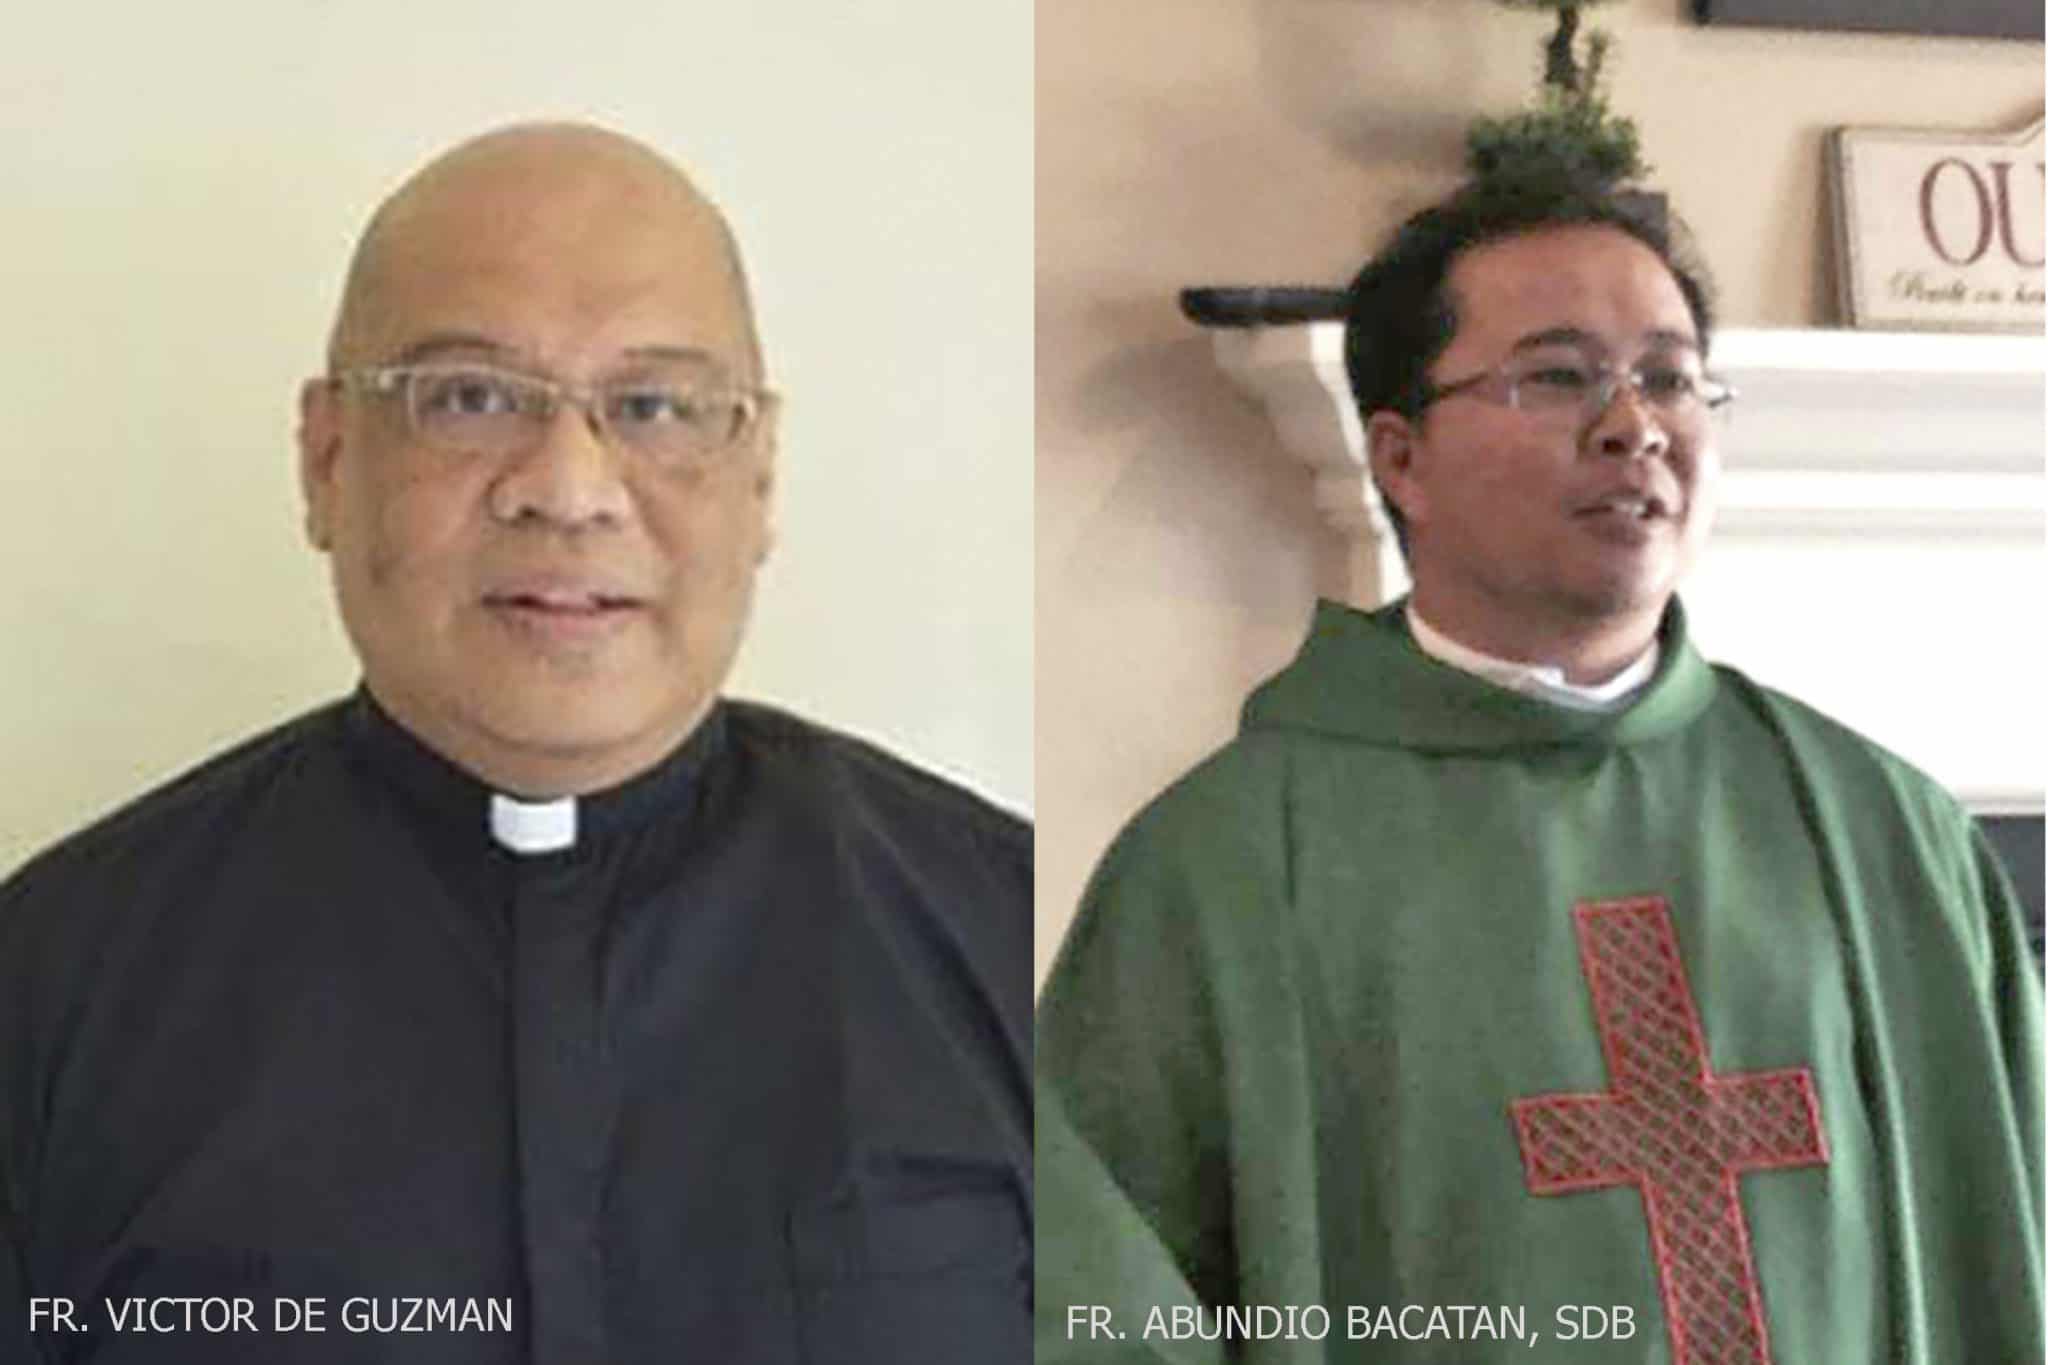 Two Catholic priests among new lawyers